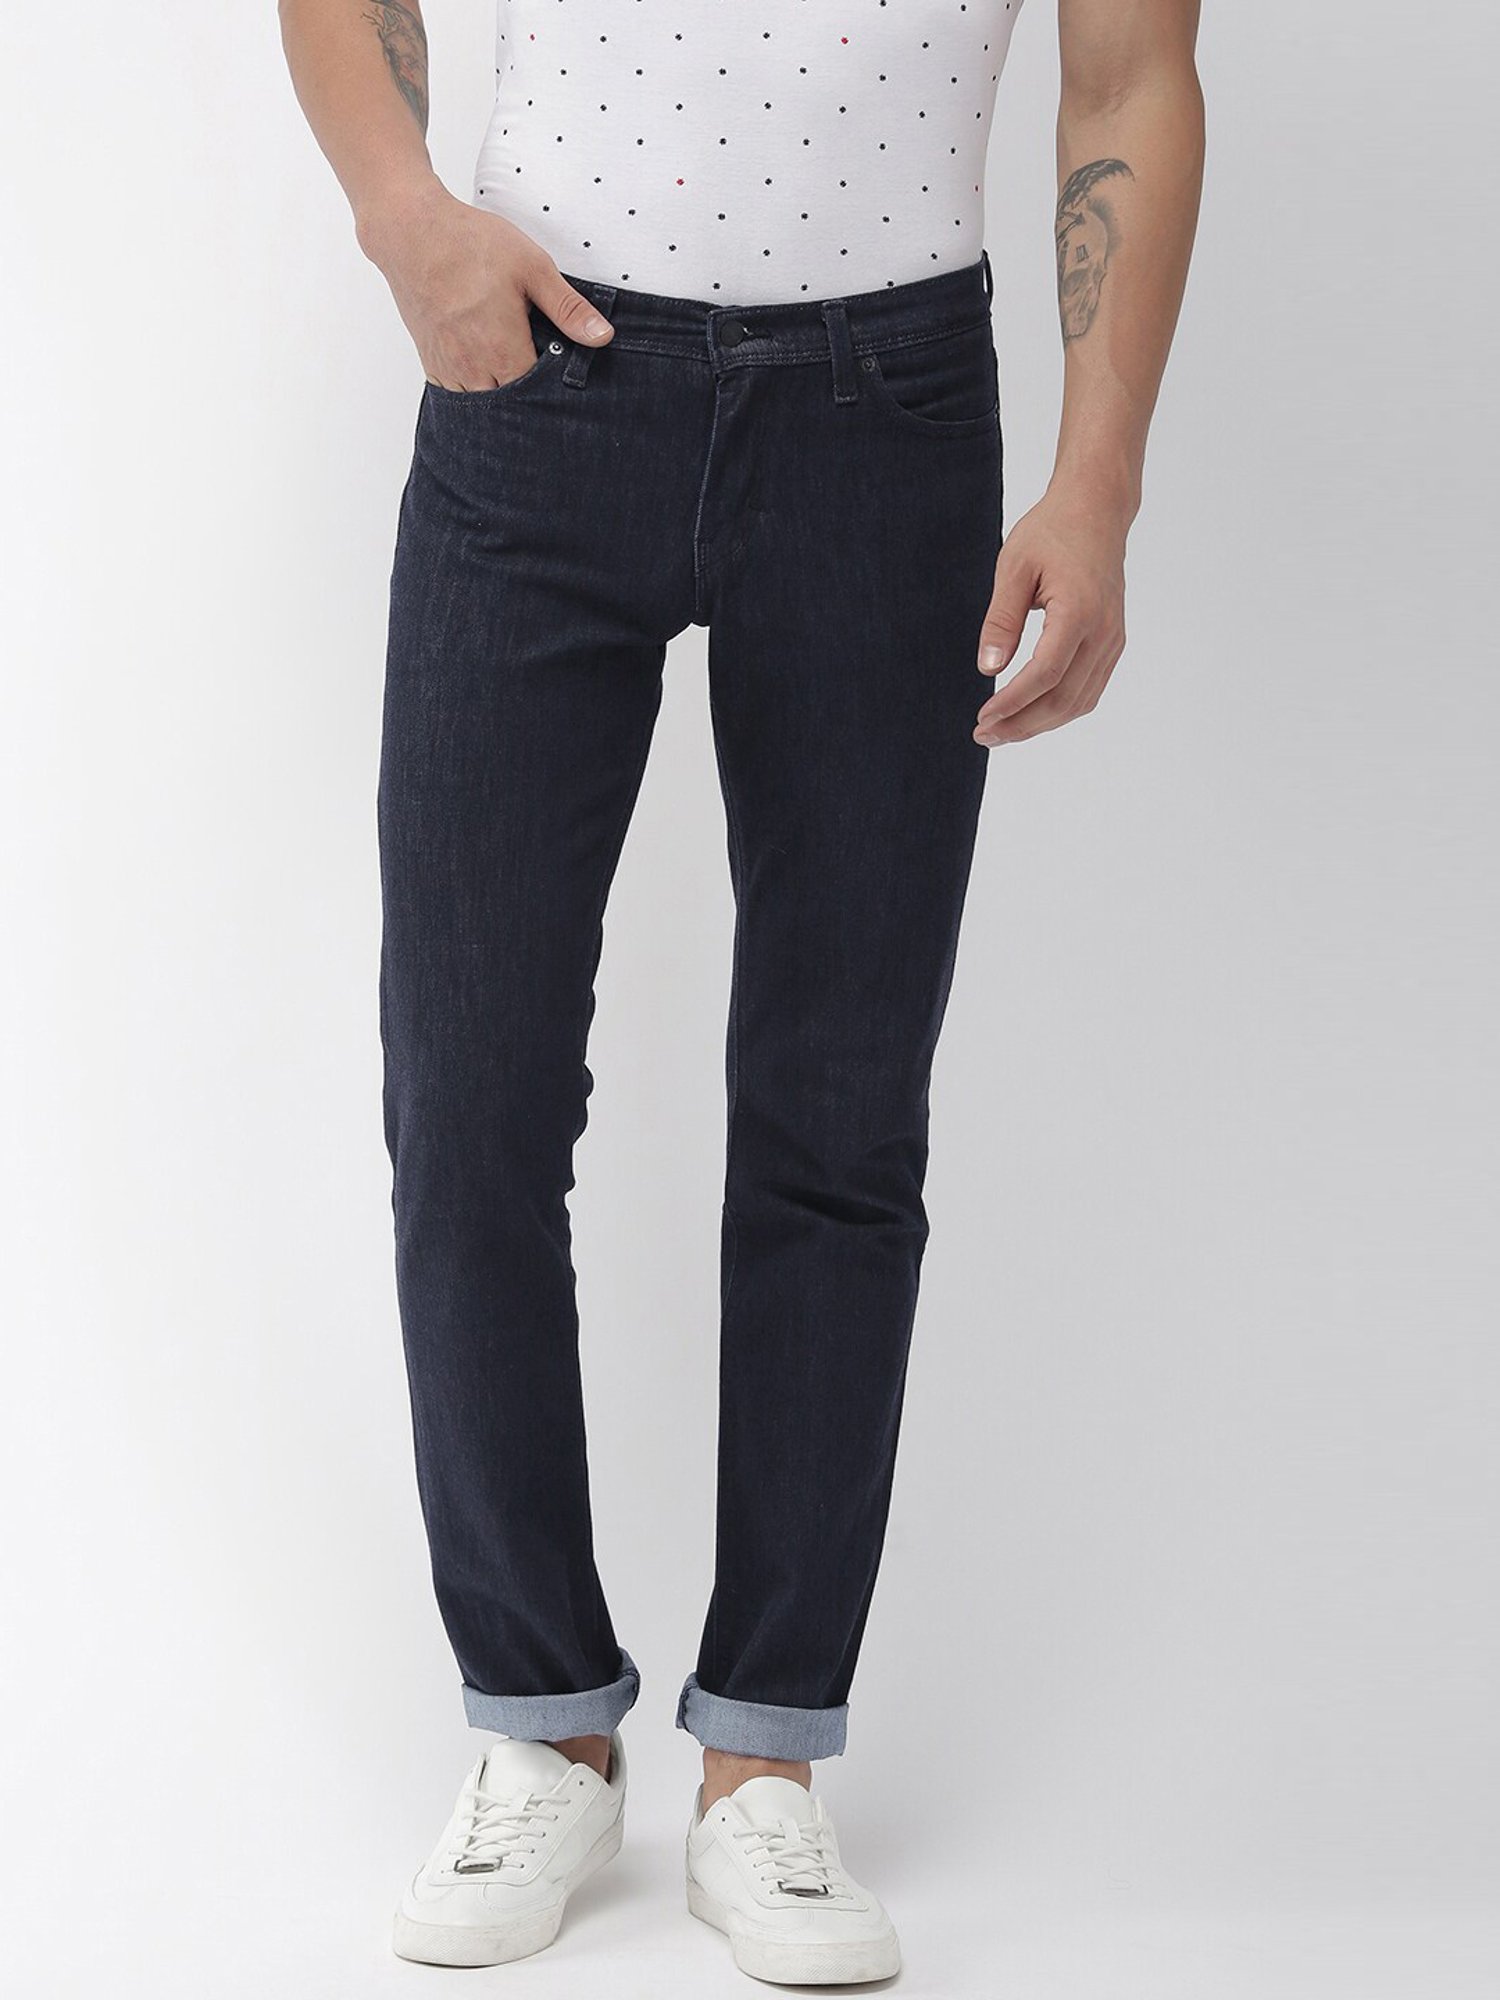 LEVI'S - Men's 501 slim taper fit jeans 